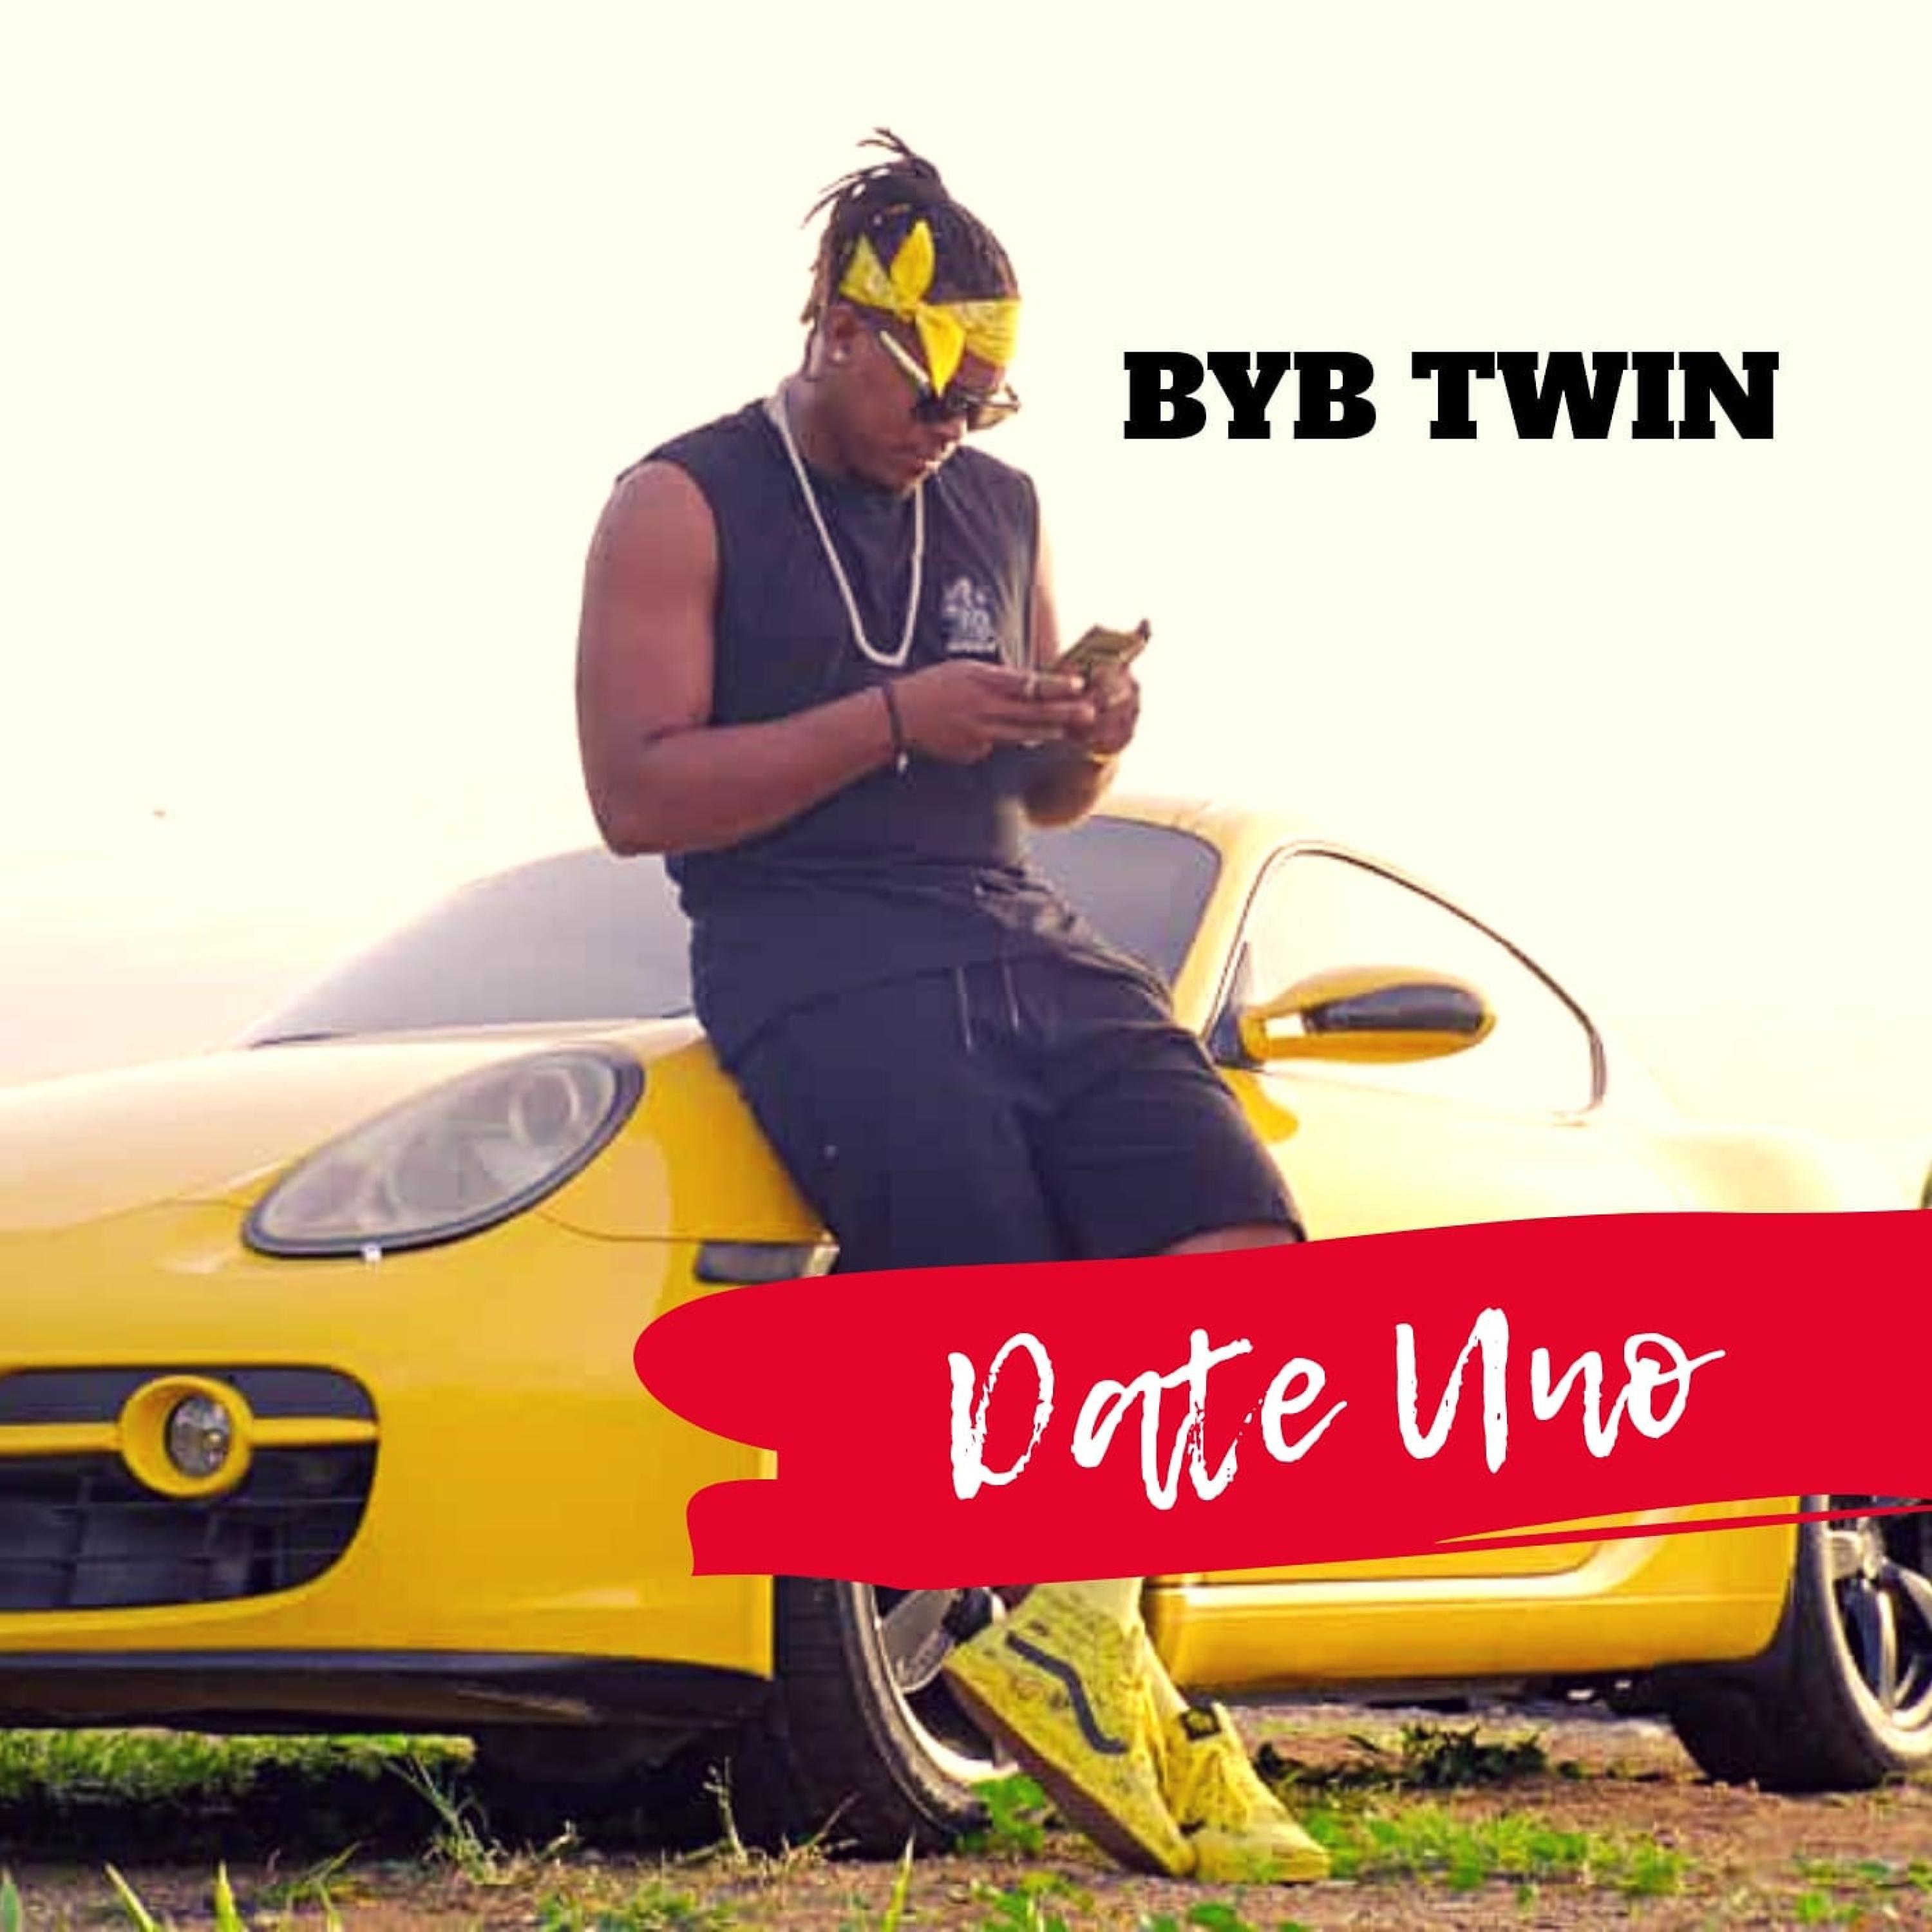 Byb Twin - Date Uno (Cavernicola Musical)